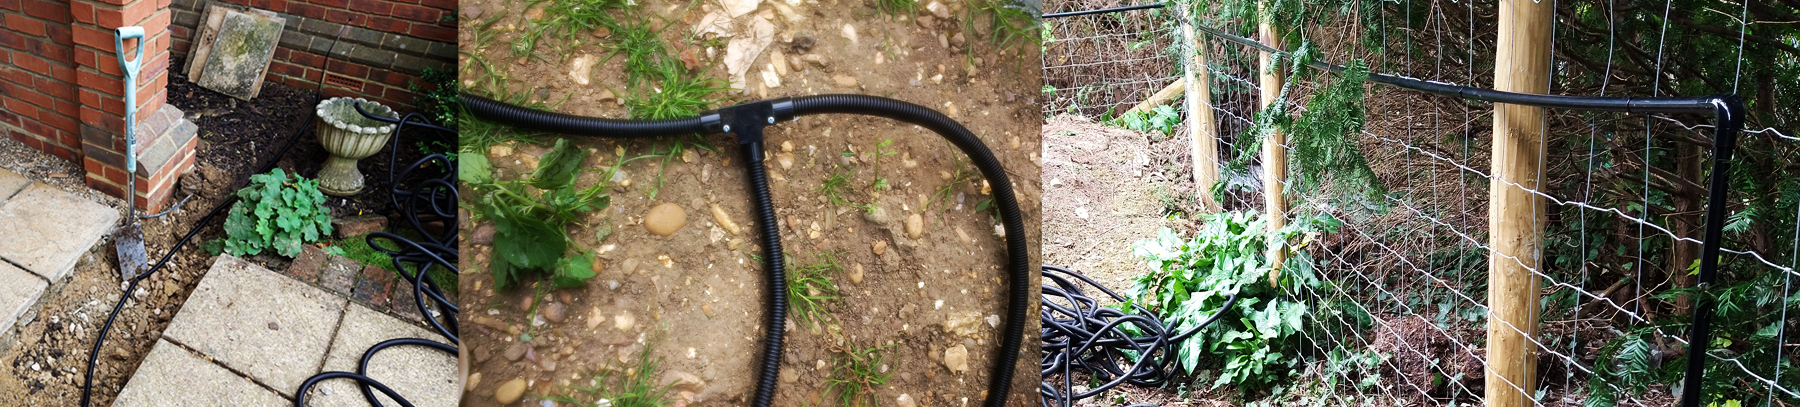 buried cat5e ethernet cabling installation in garden hertfordshire